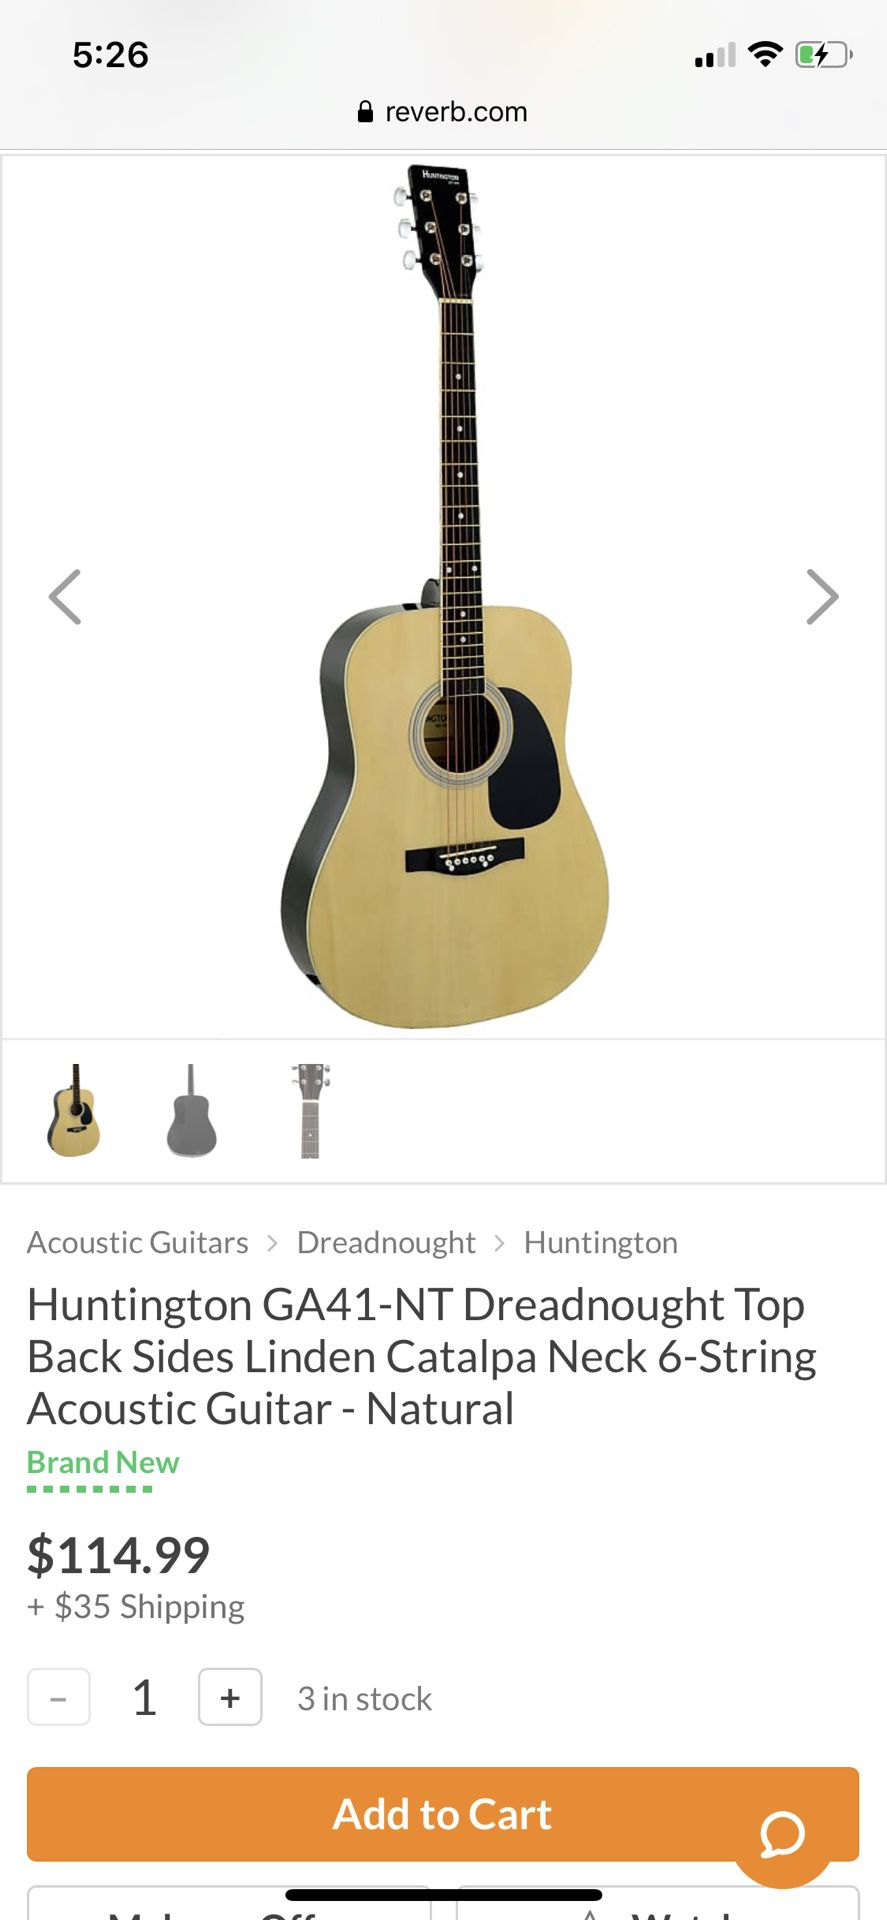 Huntington GA41-NT Dreadnought Top Back Sides Linden Catalpa Neck 6-String Acoustic Guitar - Natural